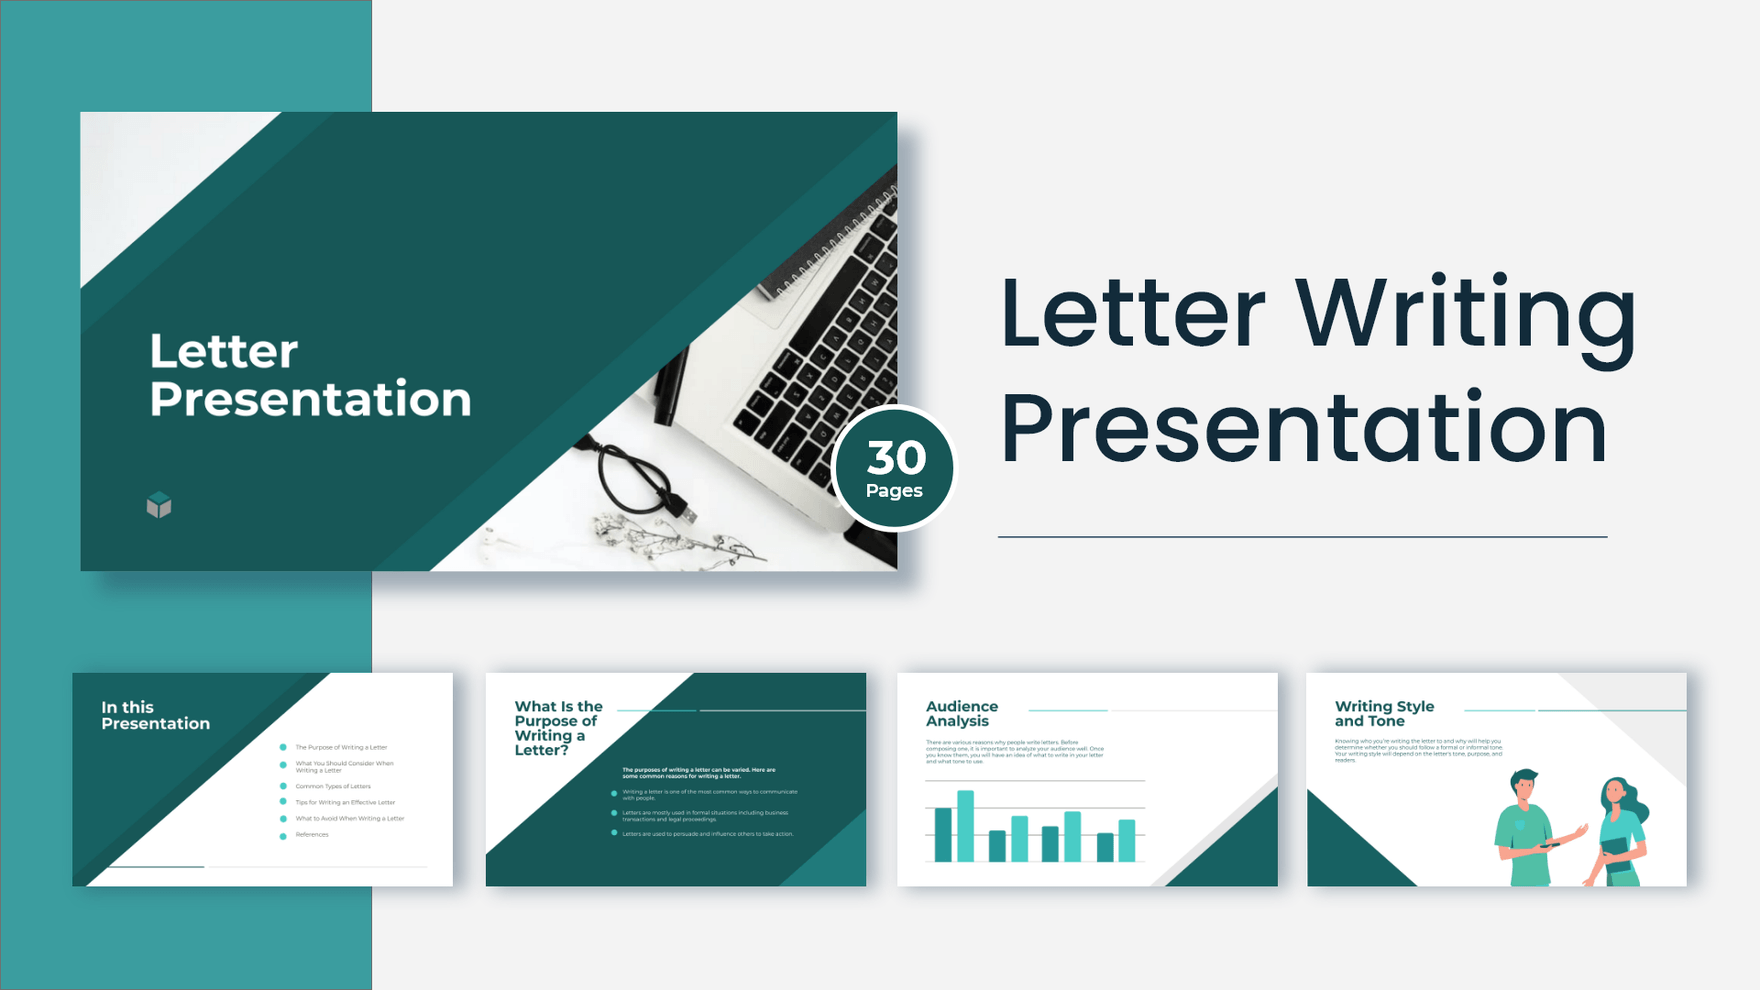 Letter Writing Presentation